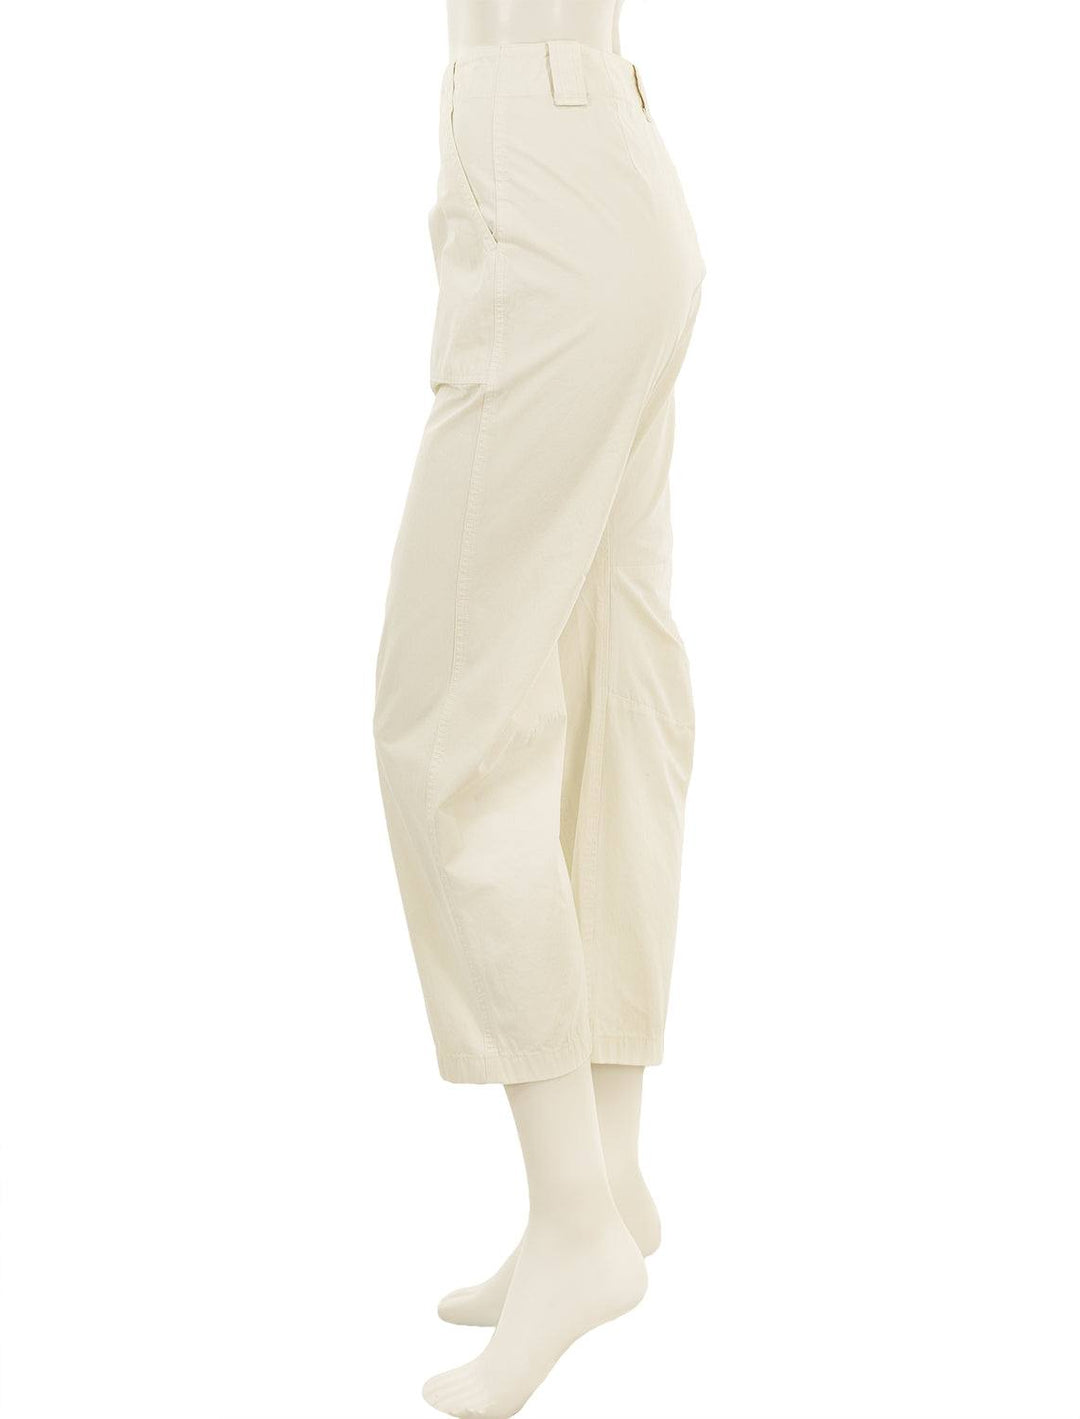 Side view of Rag & Bone's leyton workwear pant in ivory.